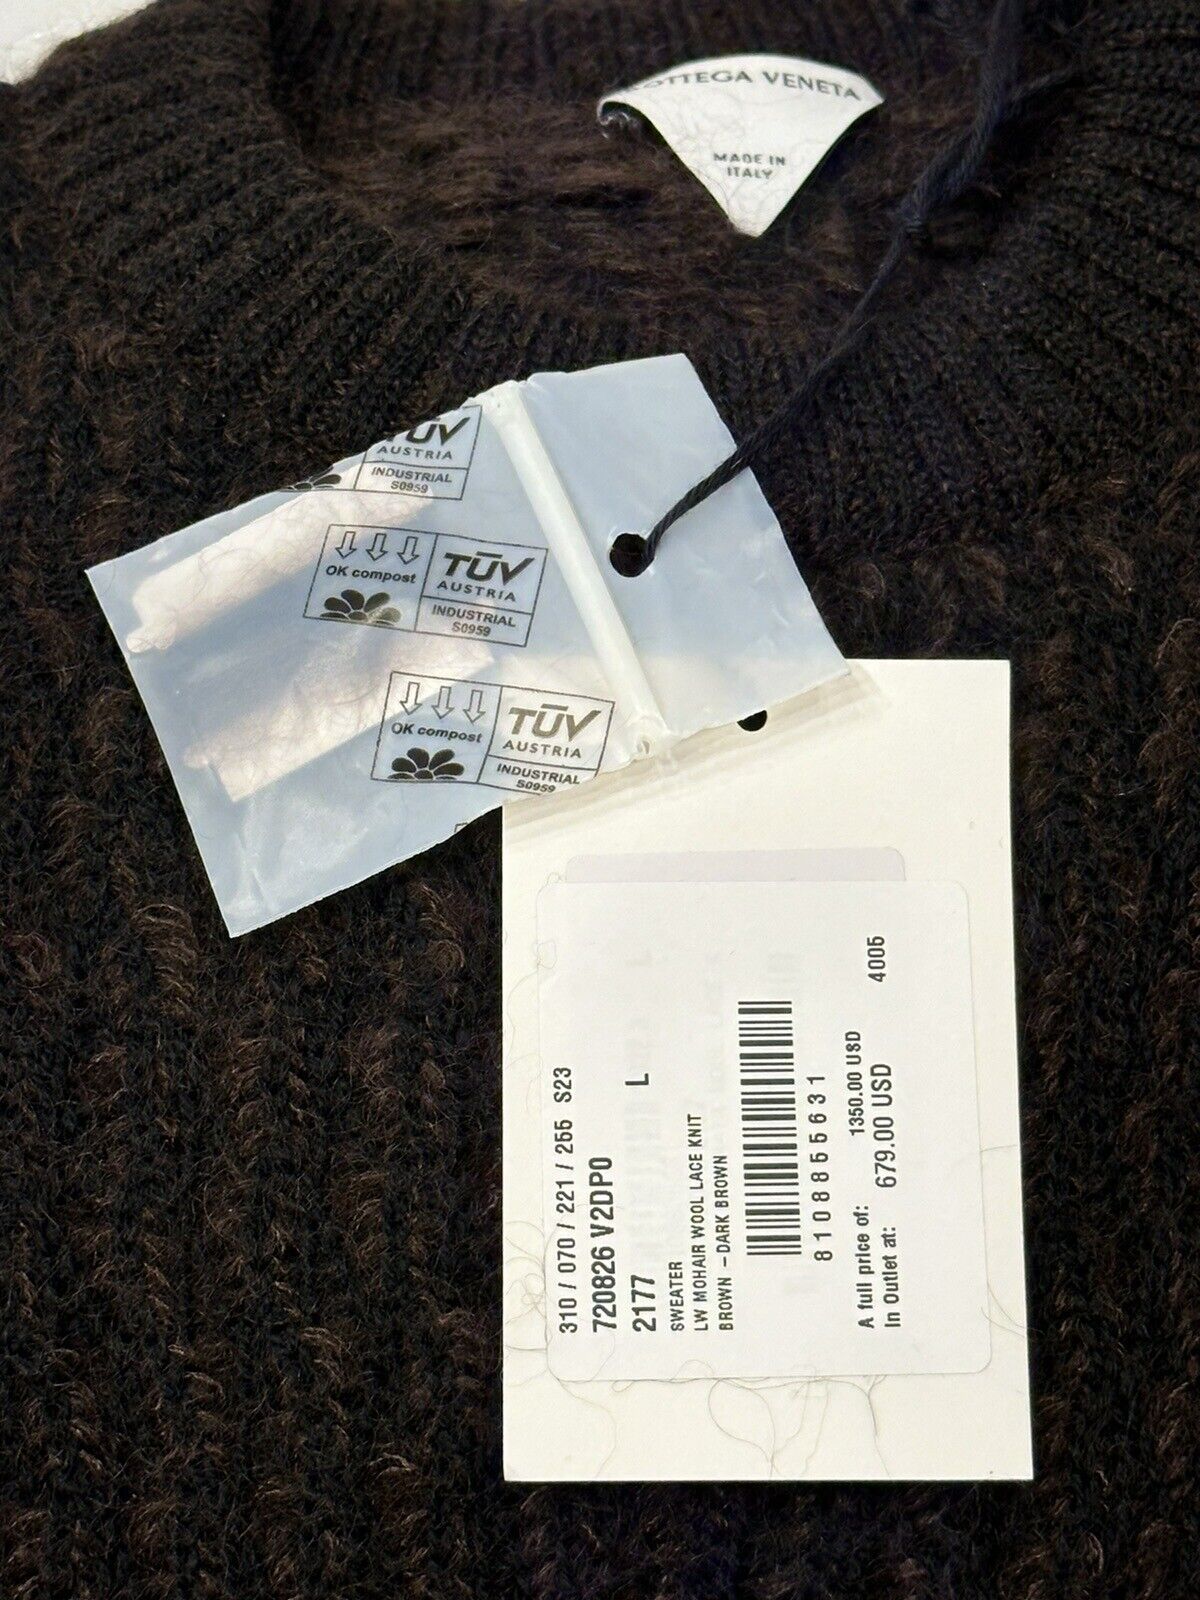 NWT $1350 Bottega Veneta Wool/Mohair Pullover Sweater Large 720826 Italy